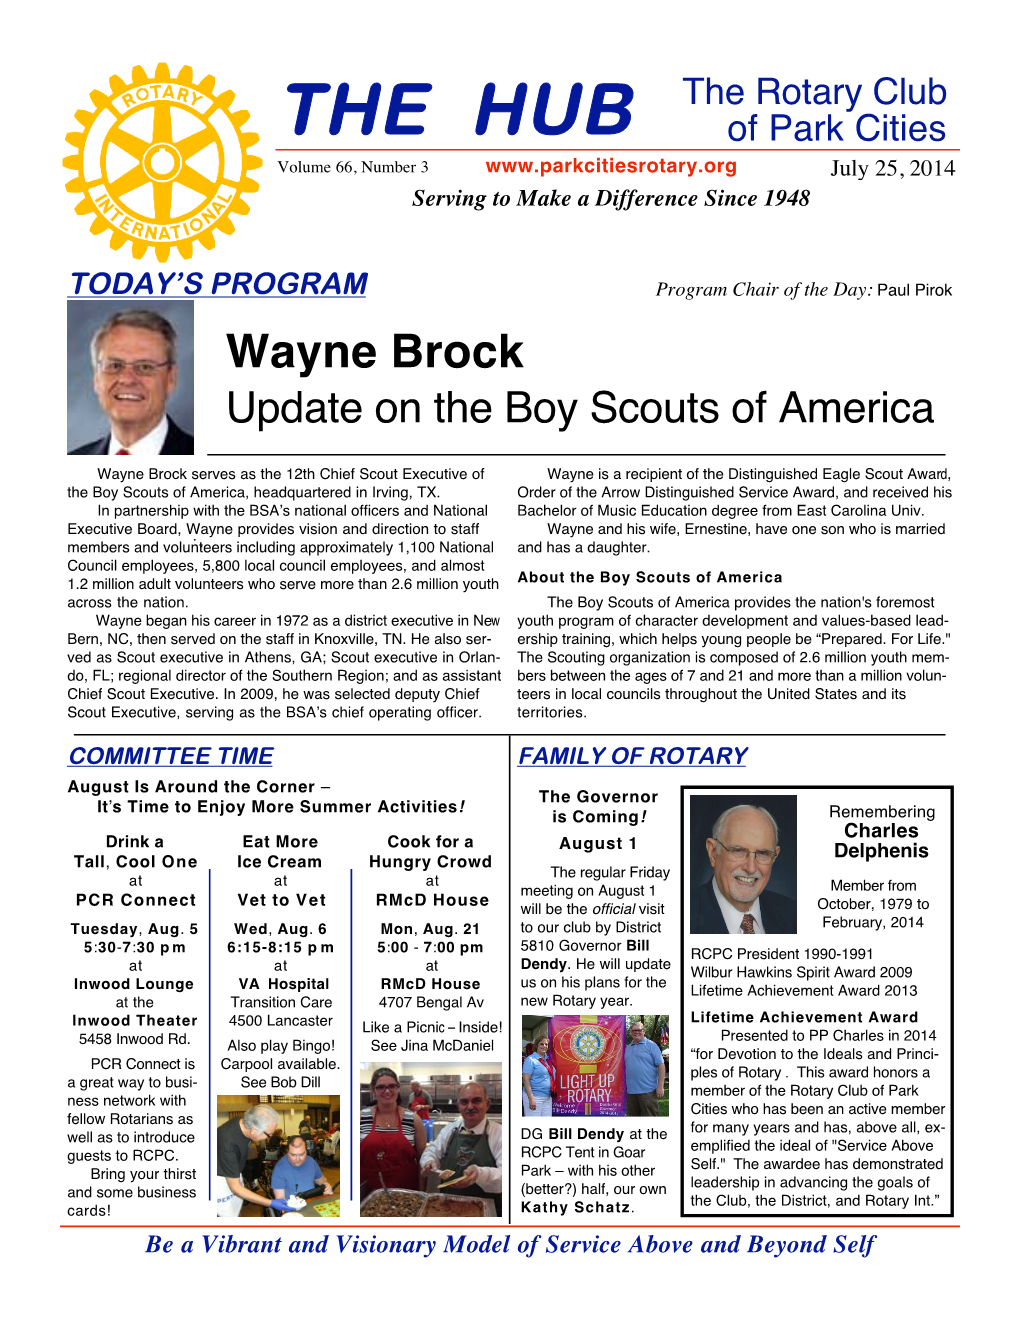 Wayne Brock Update on the Boy Scouts of America